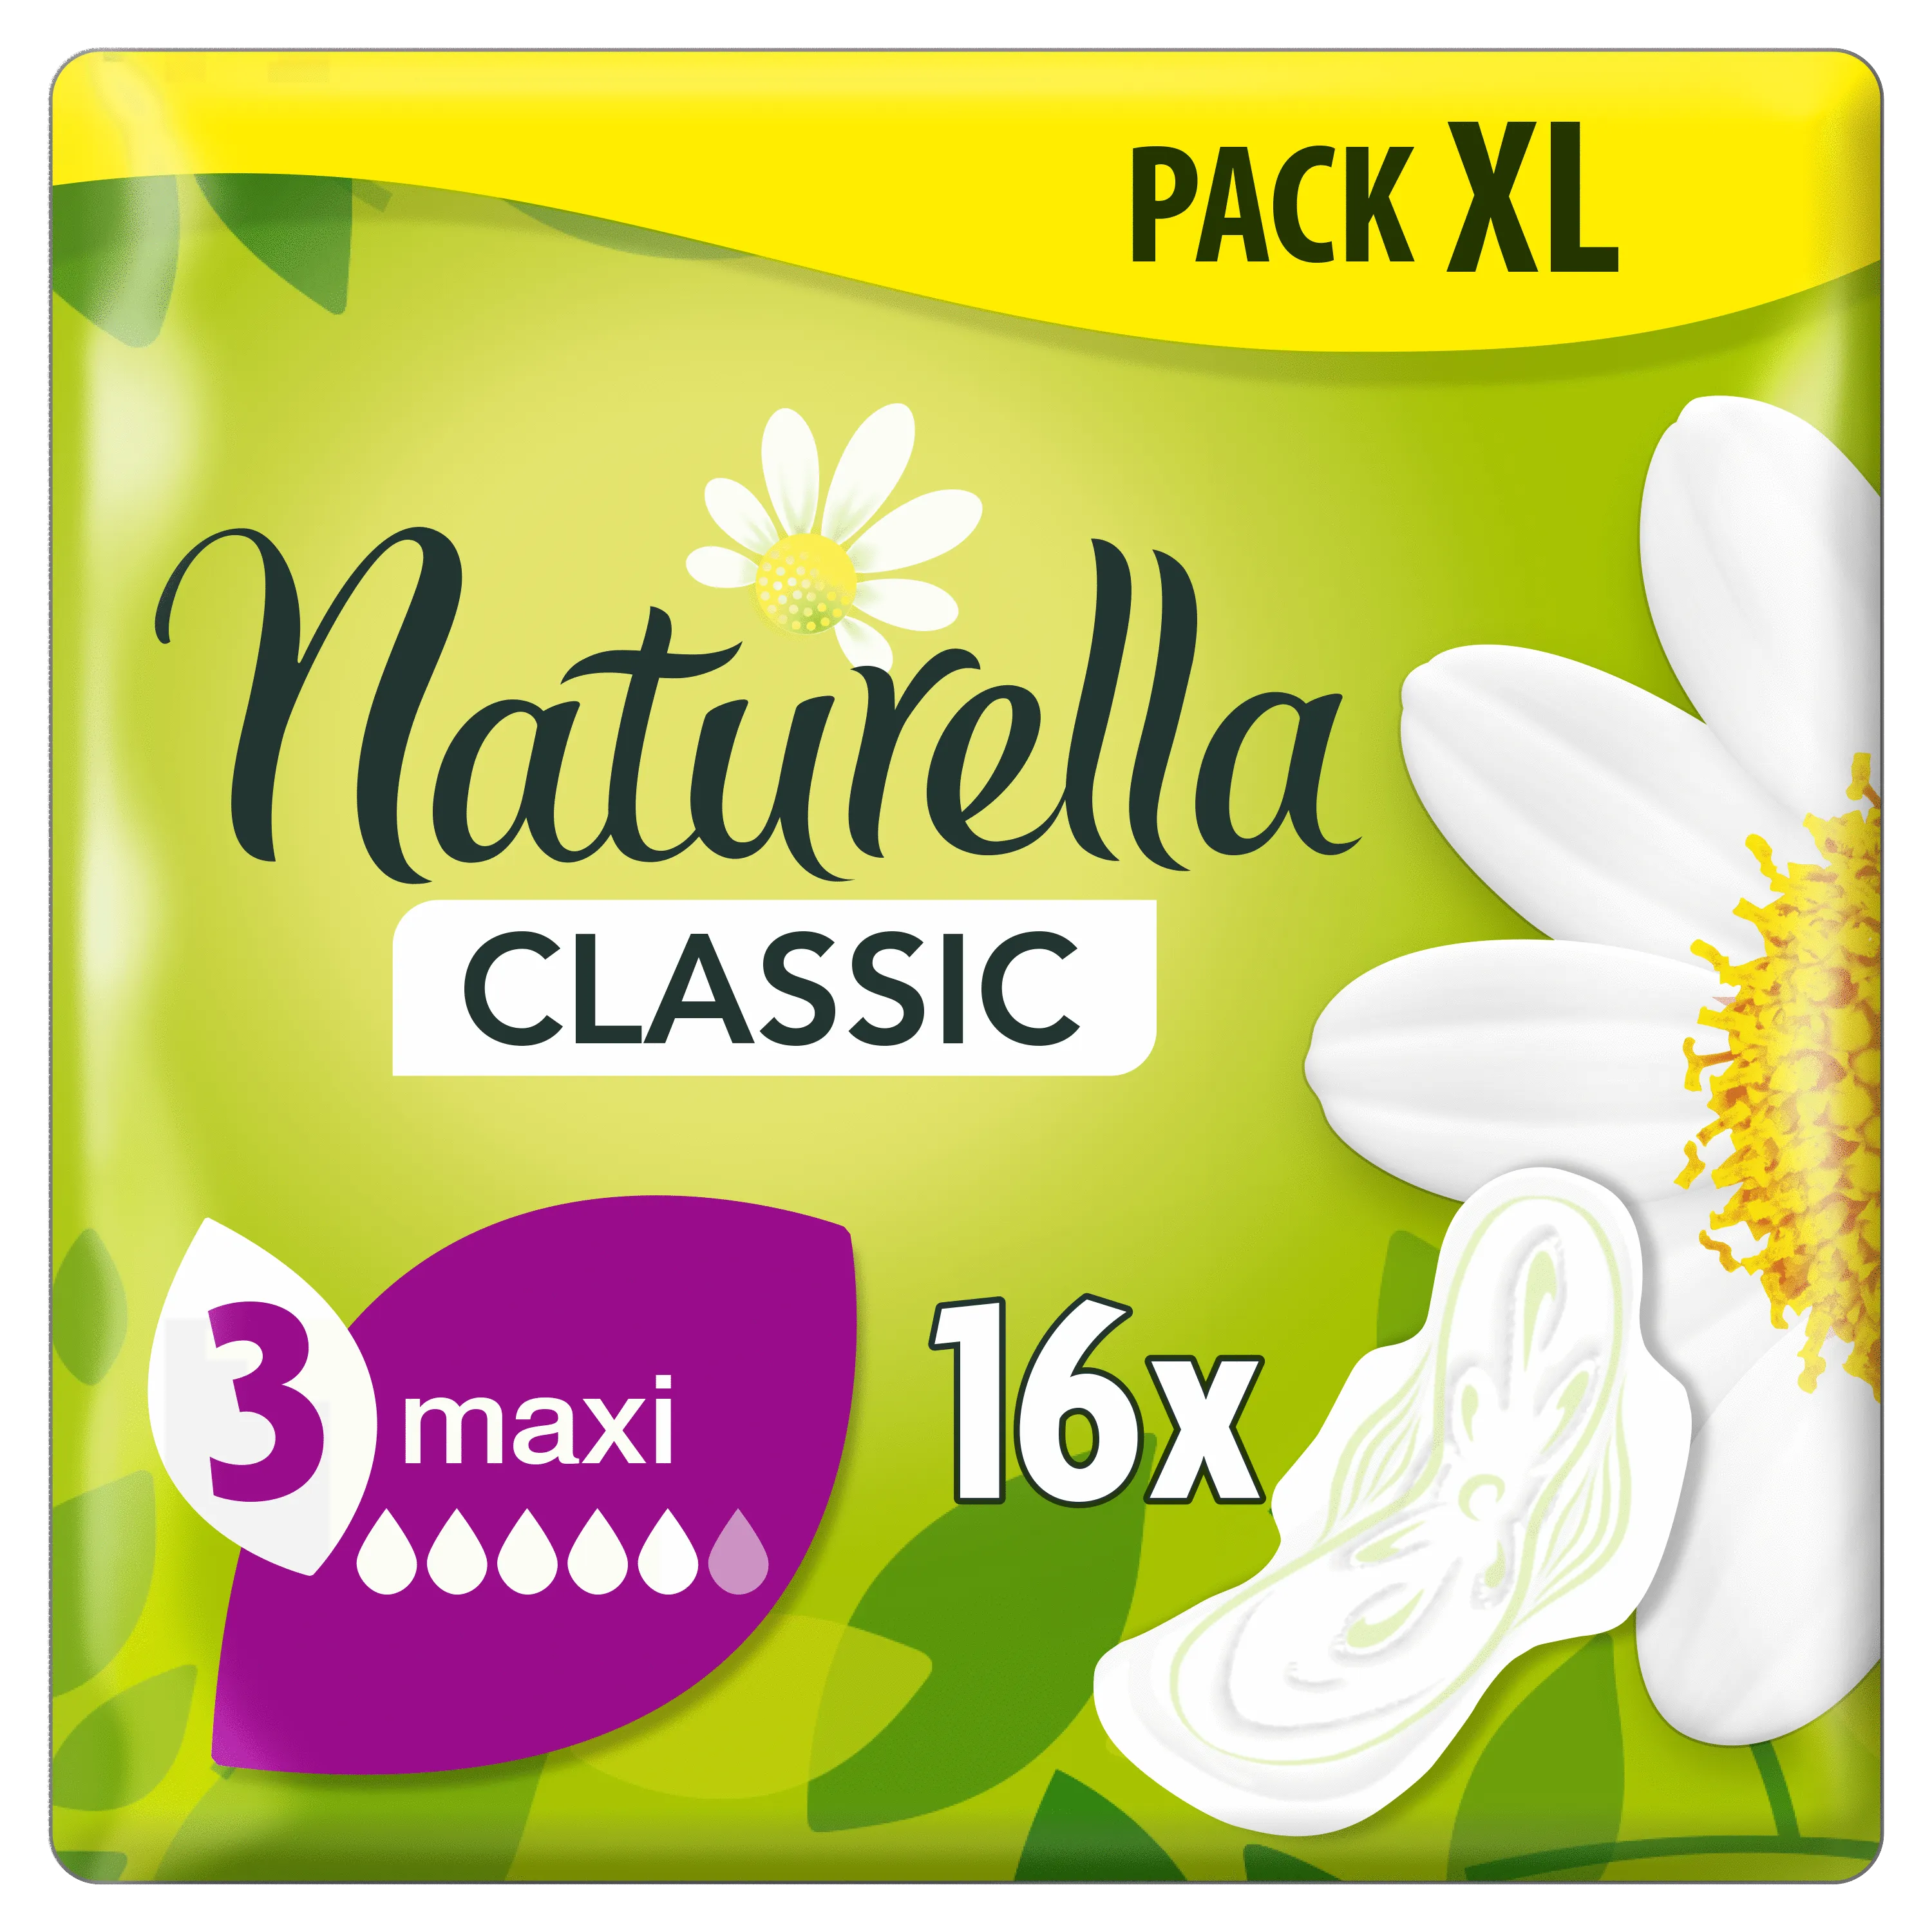 Naturella Classic Maxi Camomile podpaski ze skrzydełkami, 16 szt. 